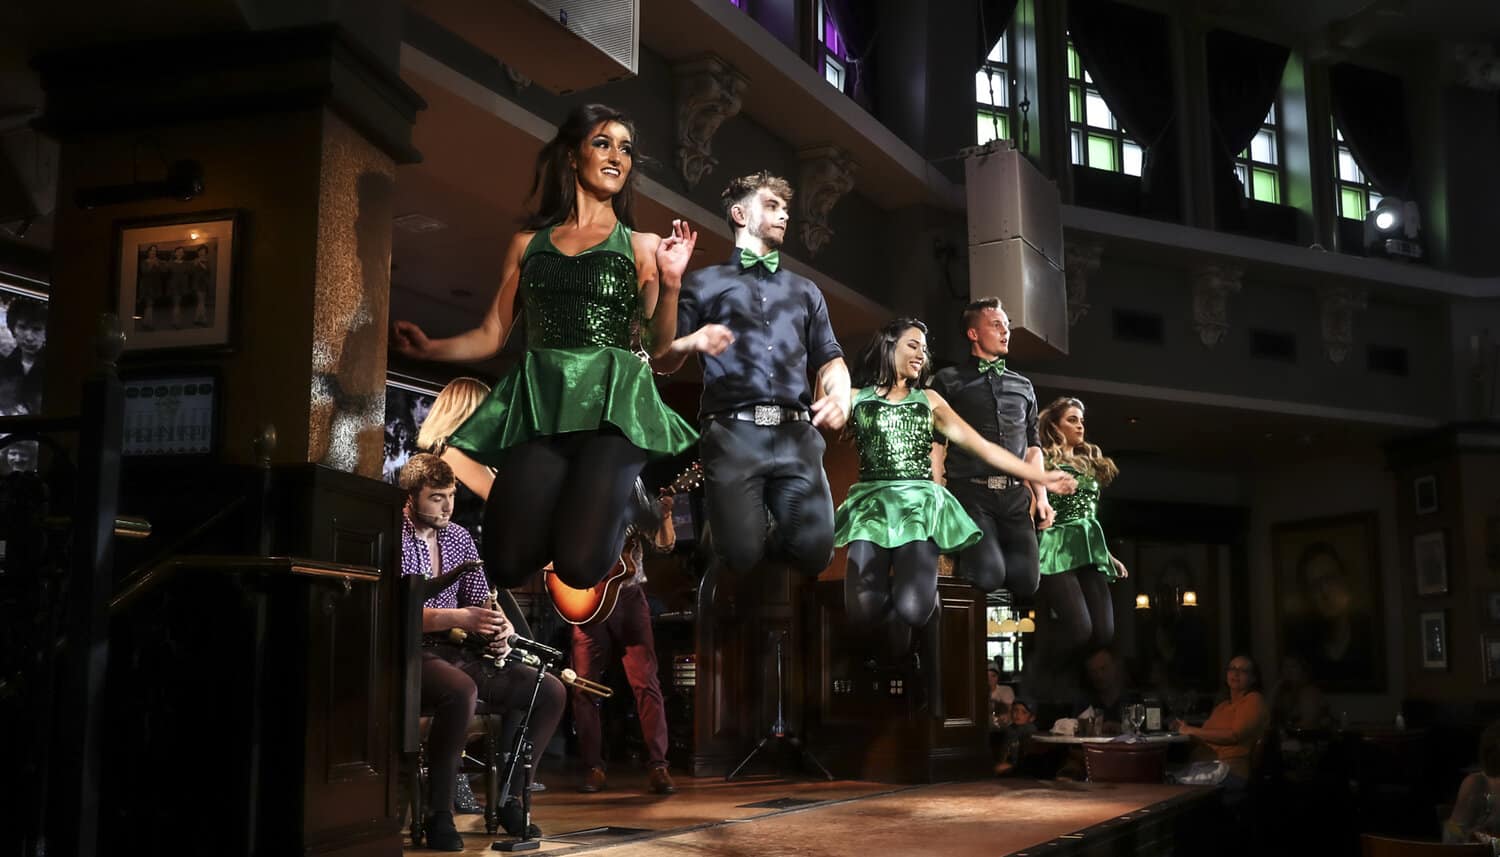 Irish dancers perform at Ragland Road in this fun Disney World dinner show.